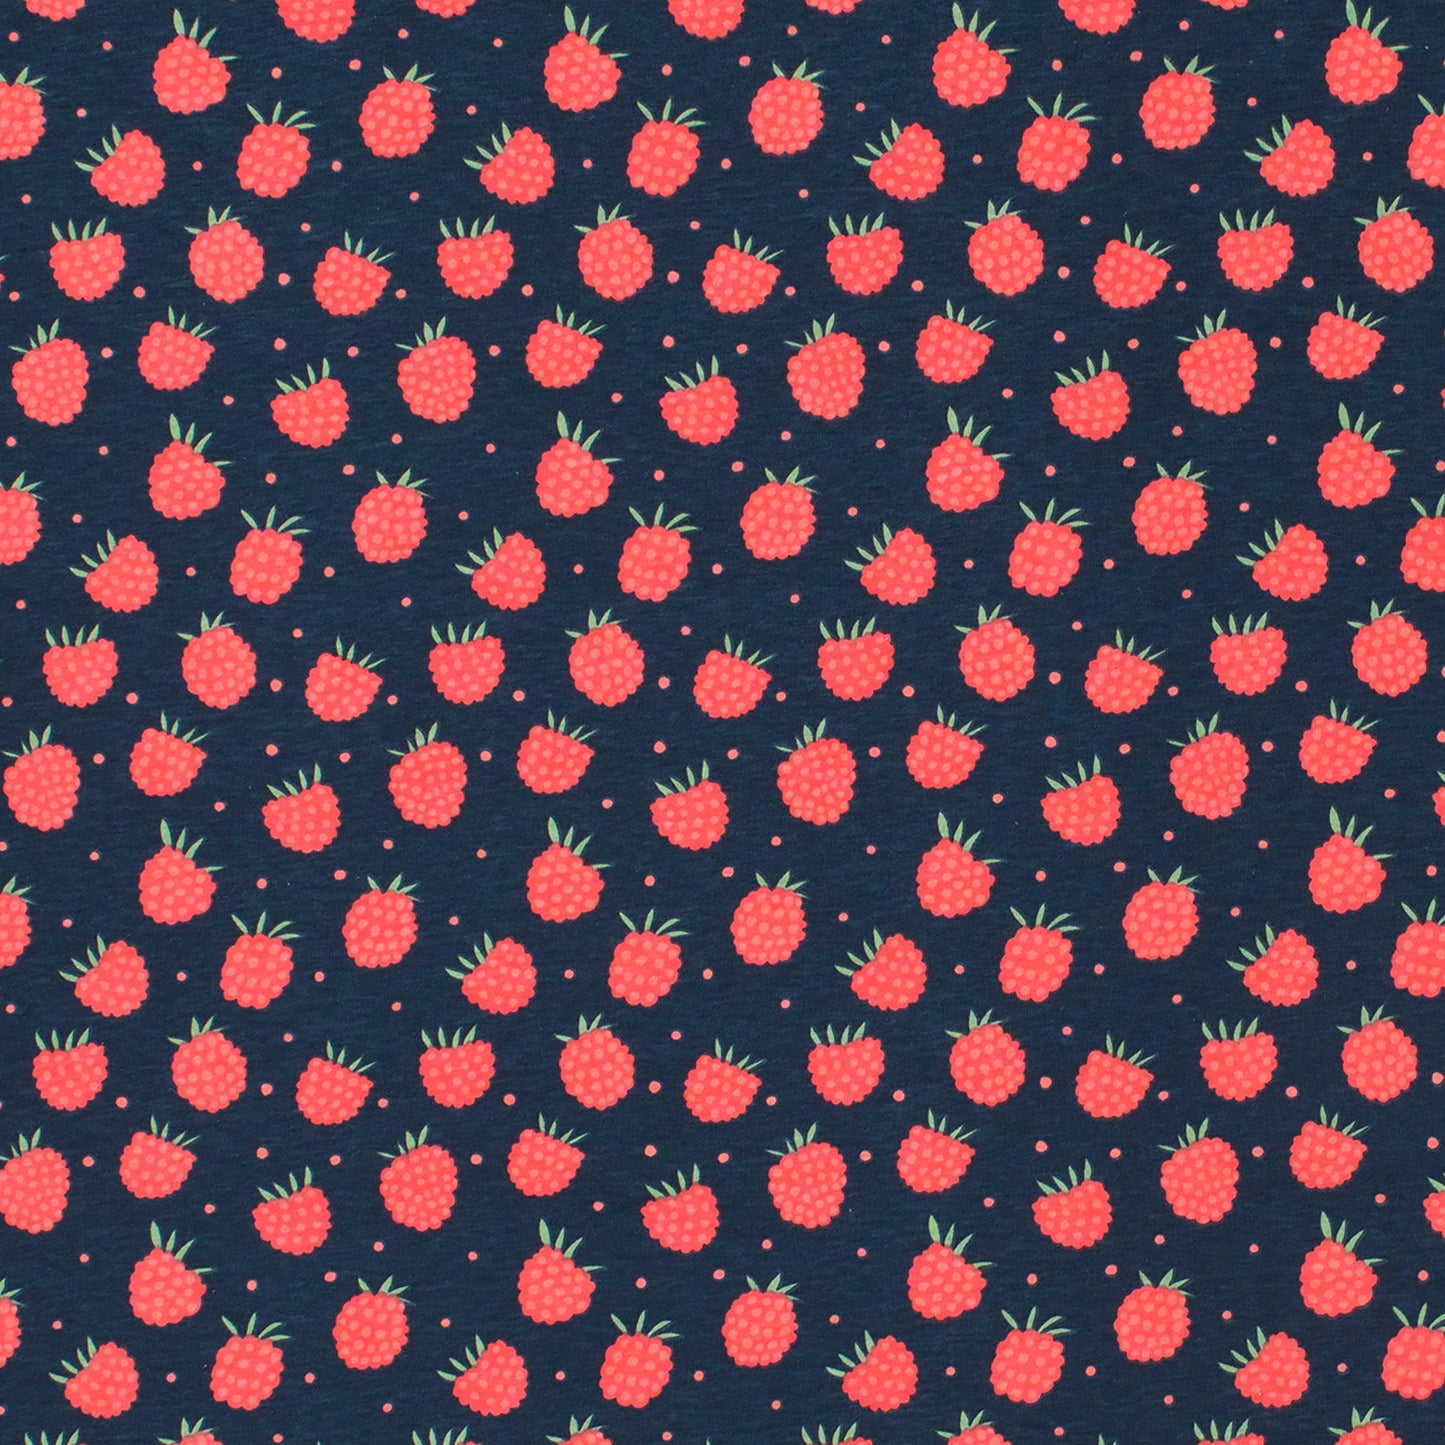 Alberta Dress - Raspberries Night Sky